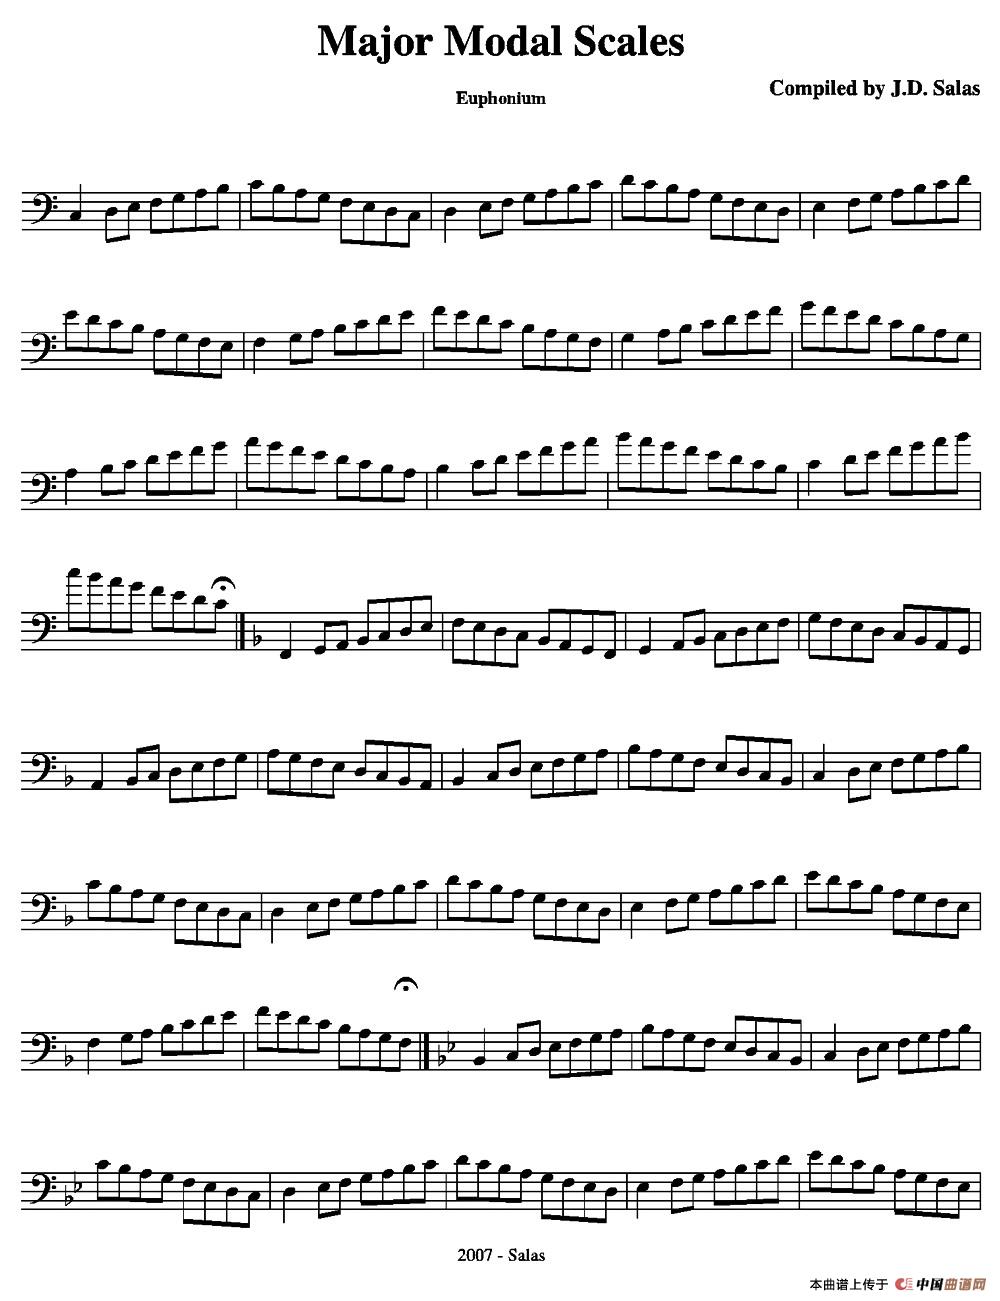 Major Modal Scales - Euphonium（上低音号练习教材选曲